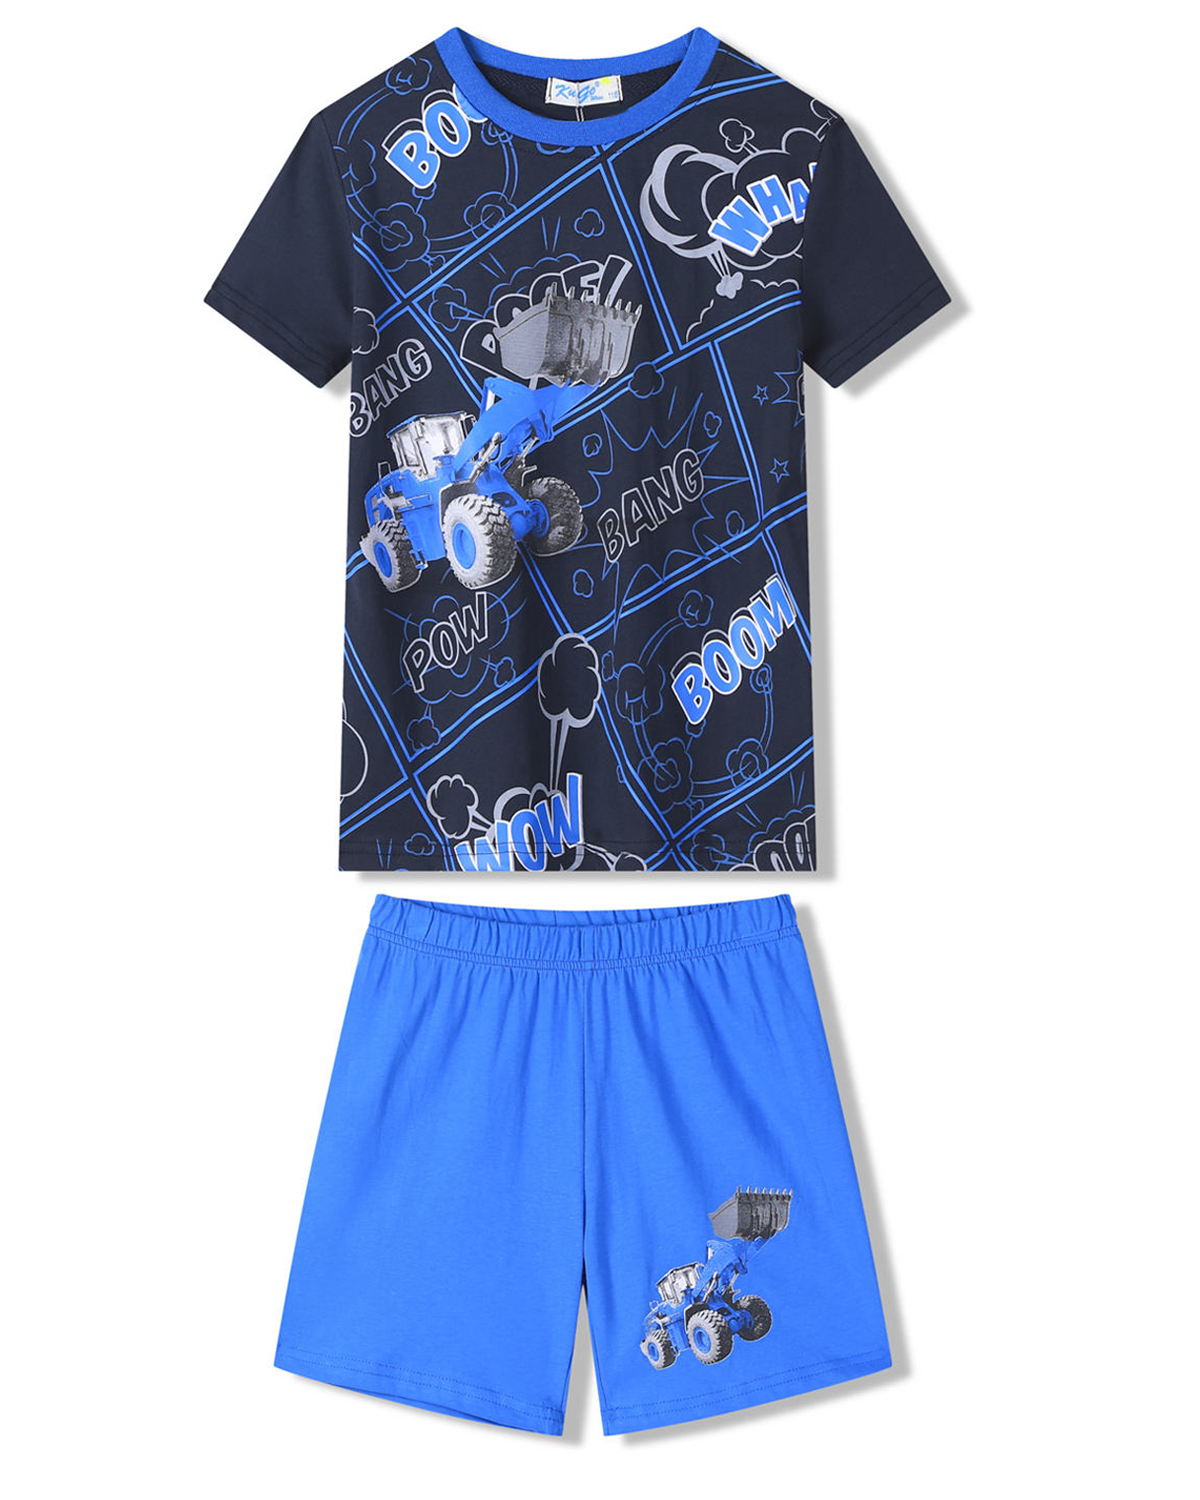 Chlapecké pyžamo - KUGO WT7310, tmavě modrá Barva: Modrá tmavě, Velikost: 110